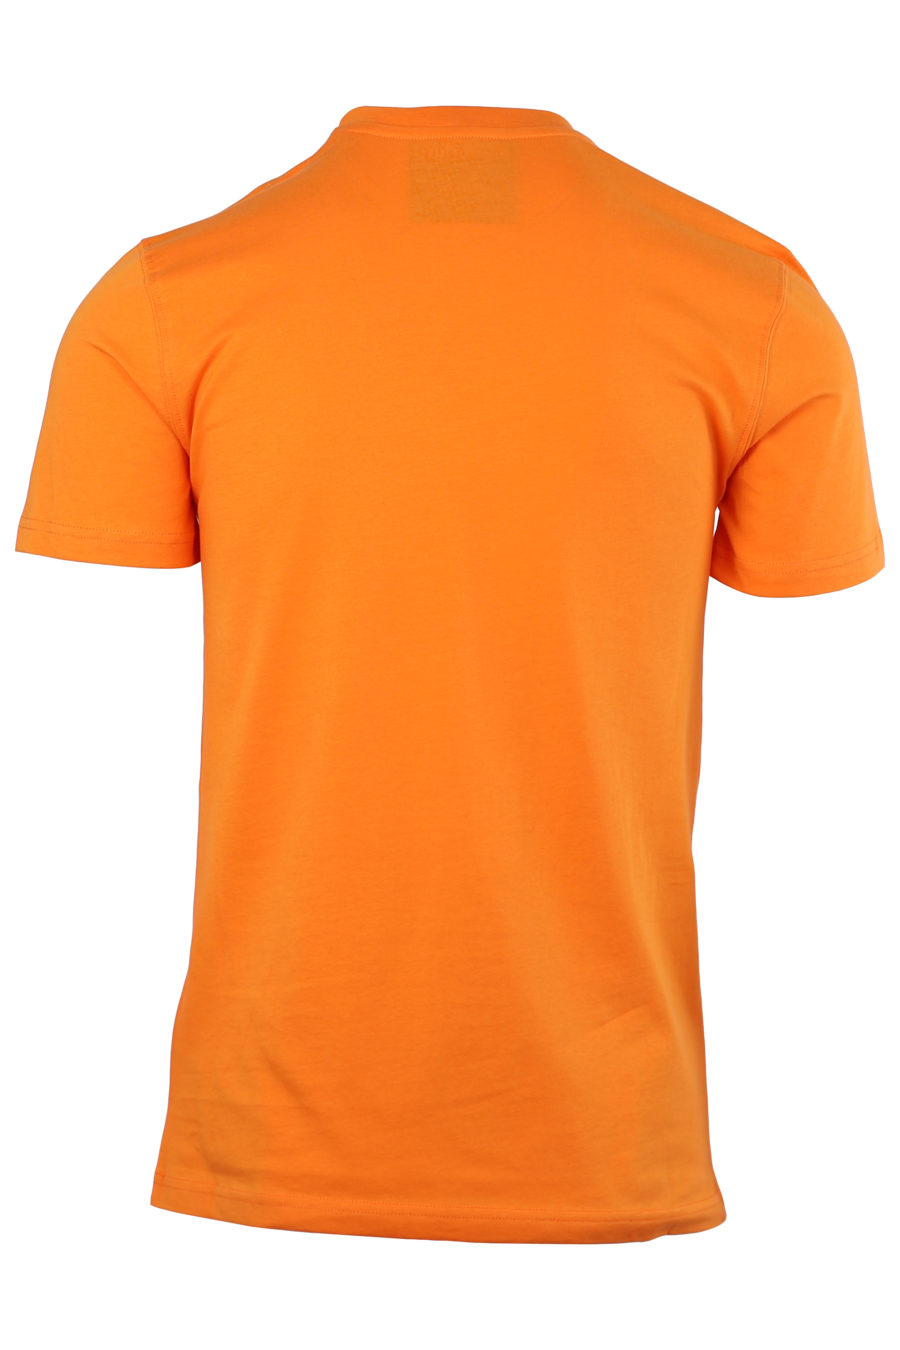 T-shirt laranja "Smiley" com logótipo bordado - IMG 9983